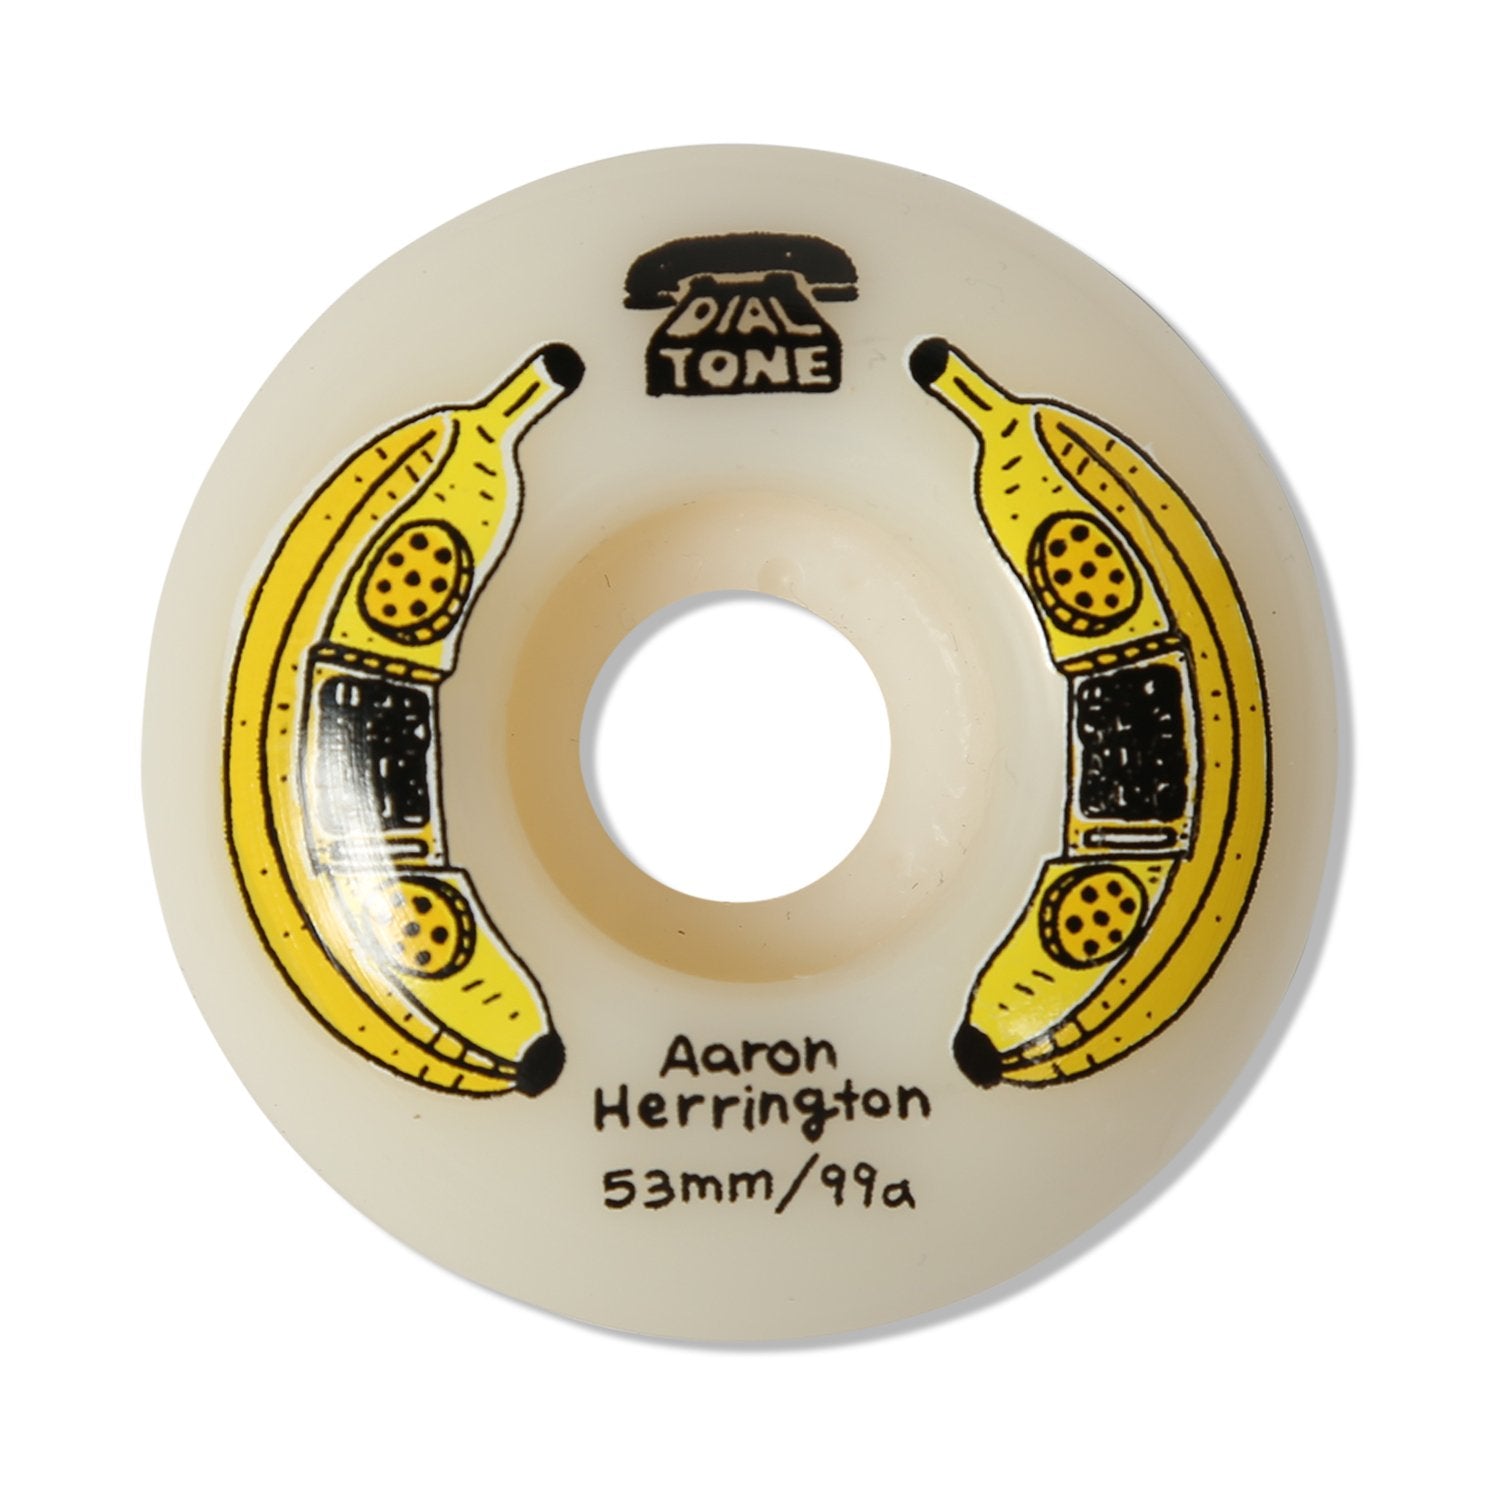 Dial Tone Herrington Banana Phone Standard Wheels 99a 53mm